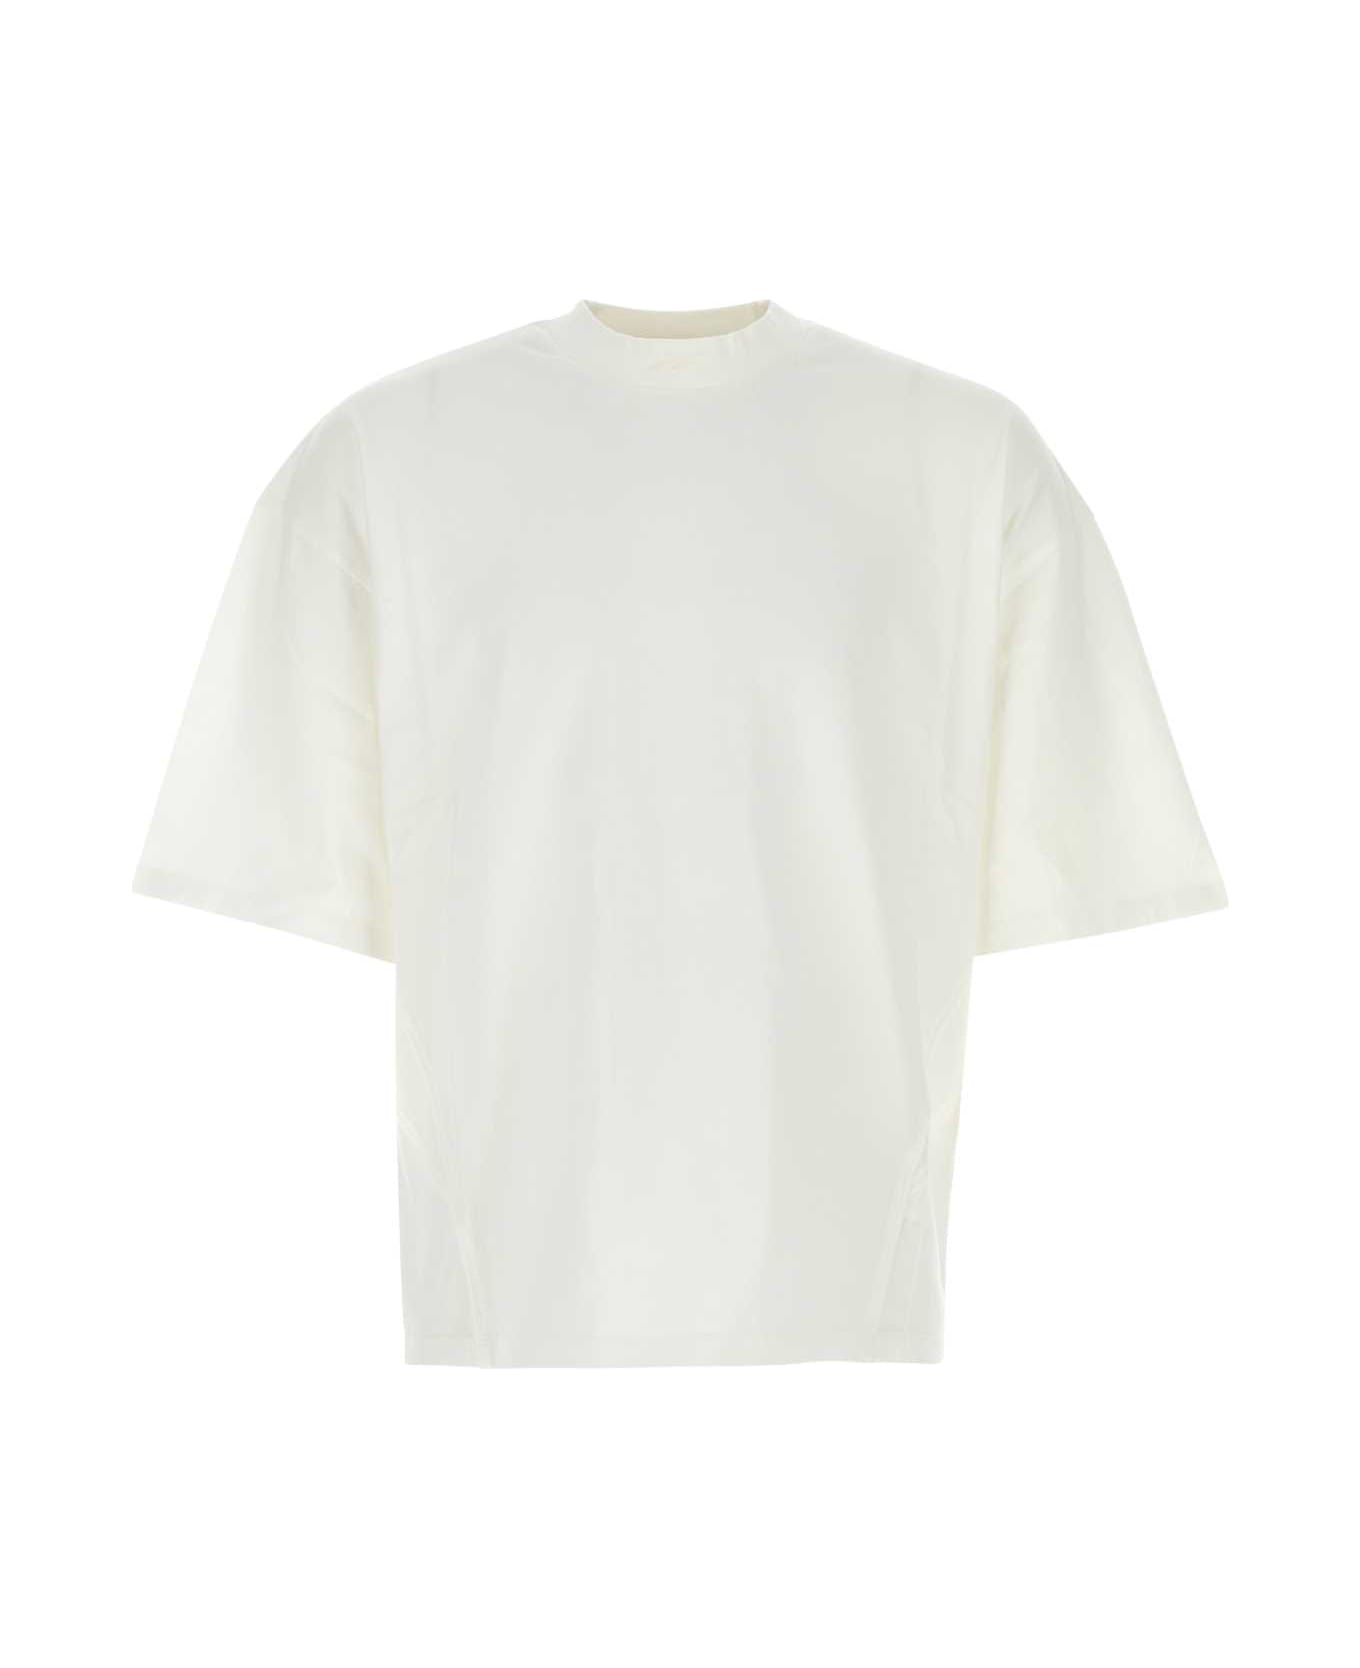 Reebok White Cotton Oversize T-shirt - BONES